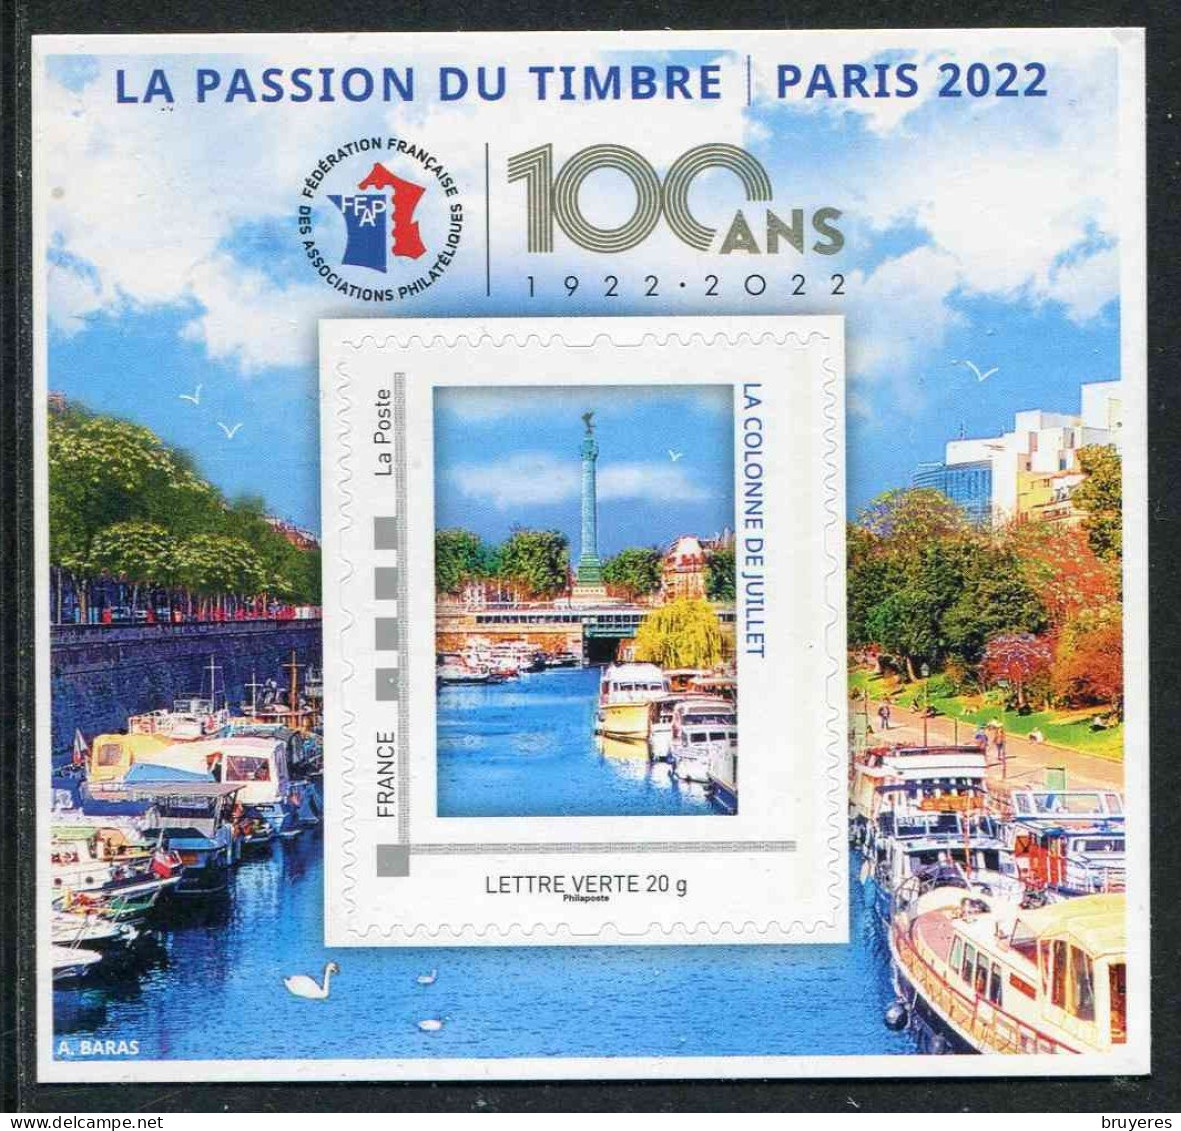 BLOC-SOUVENIR** De 2022 De La FFAP "95ème CONGRES PARIS - LA PASSION DU TIMBRE - 100 ANS De La F.F.A.P." N° 04910 - FFAP